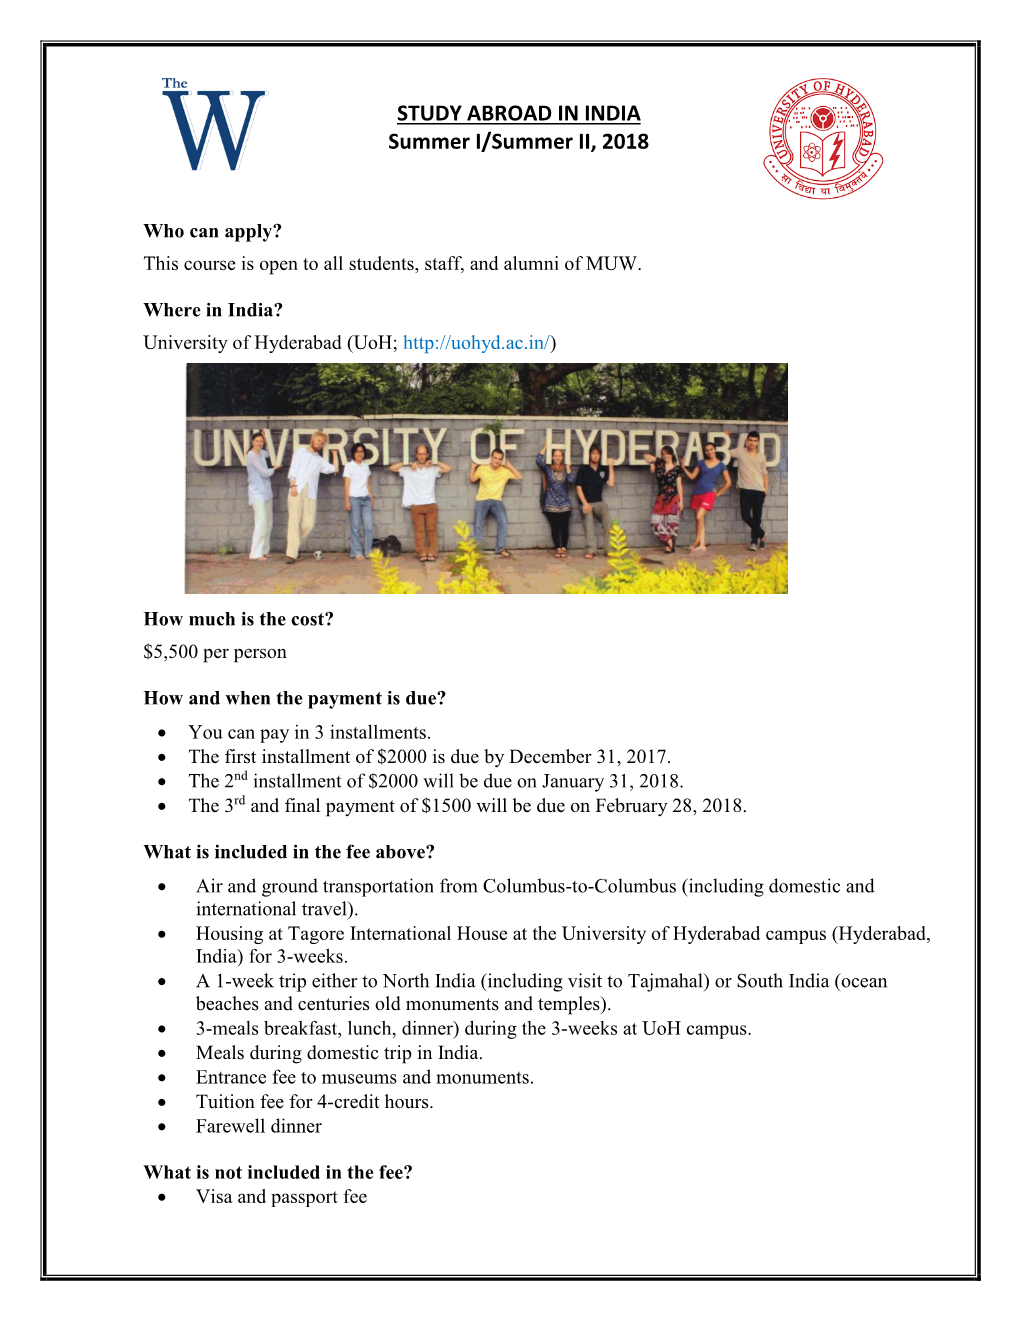 STUDY ABROAD in INDIA Summer I/Summer II, 2018